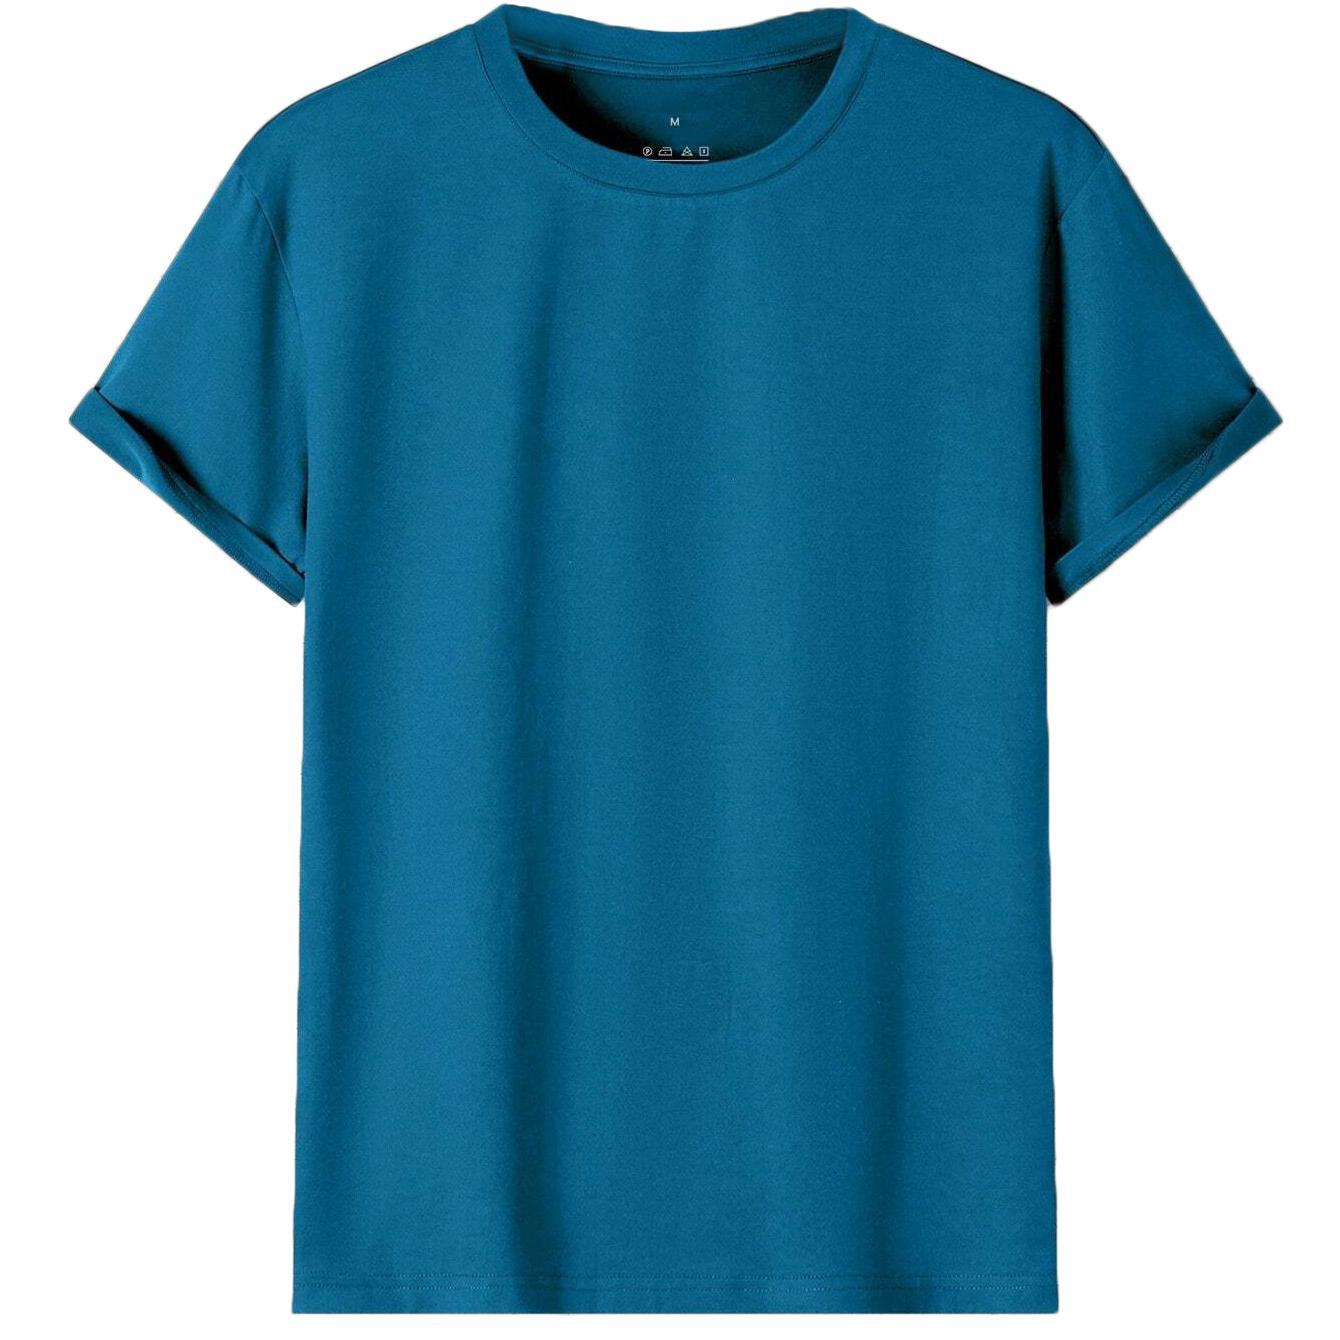 Adult 100% Cotton T-Shirt Unisex Men's Basic Plain Blank Crew Tee Tops Shirts, Aqua, S